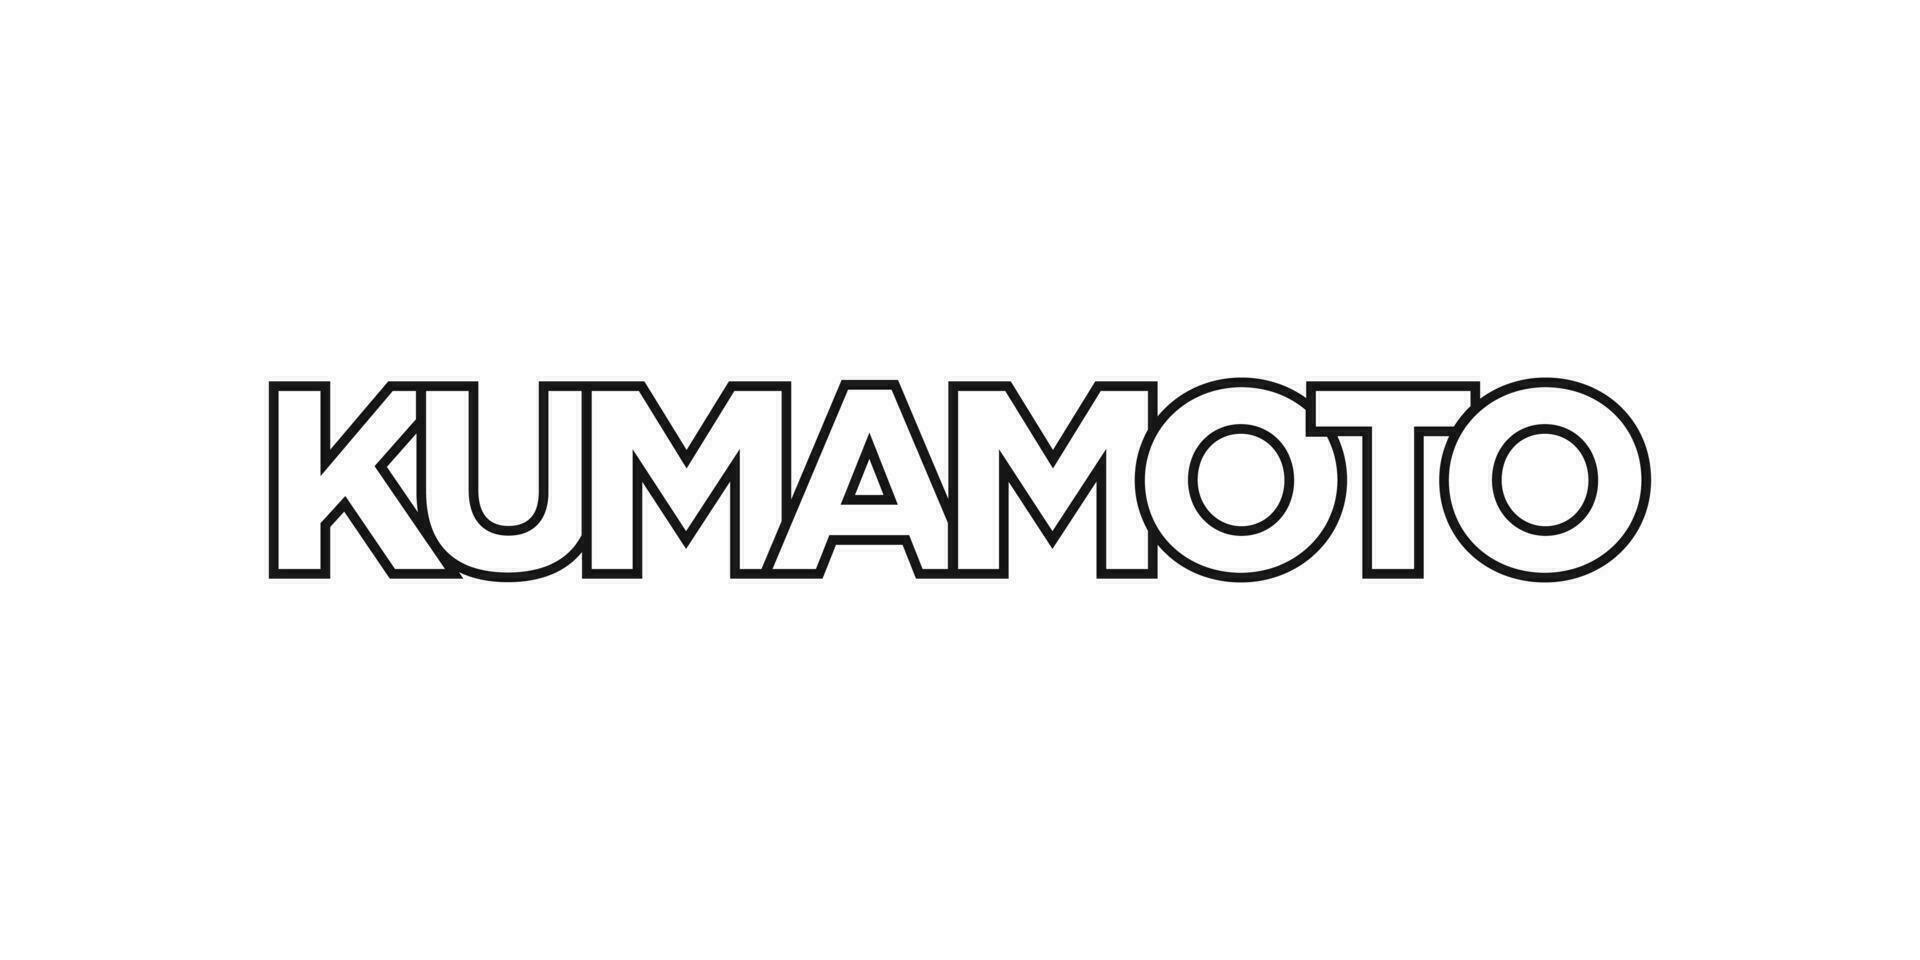 kumamoto i de japan emblem. de design funktioner en geometrisk stil, vektor illustration med djärv typografi i en modern font. de grafisk slogan text.